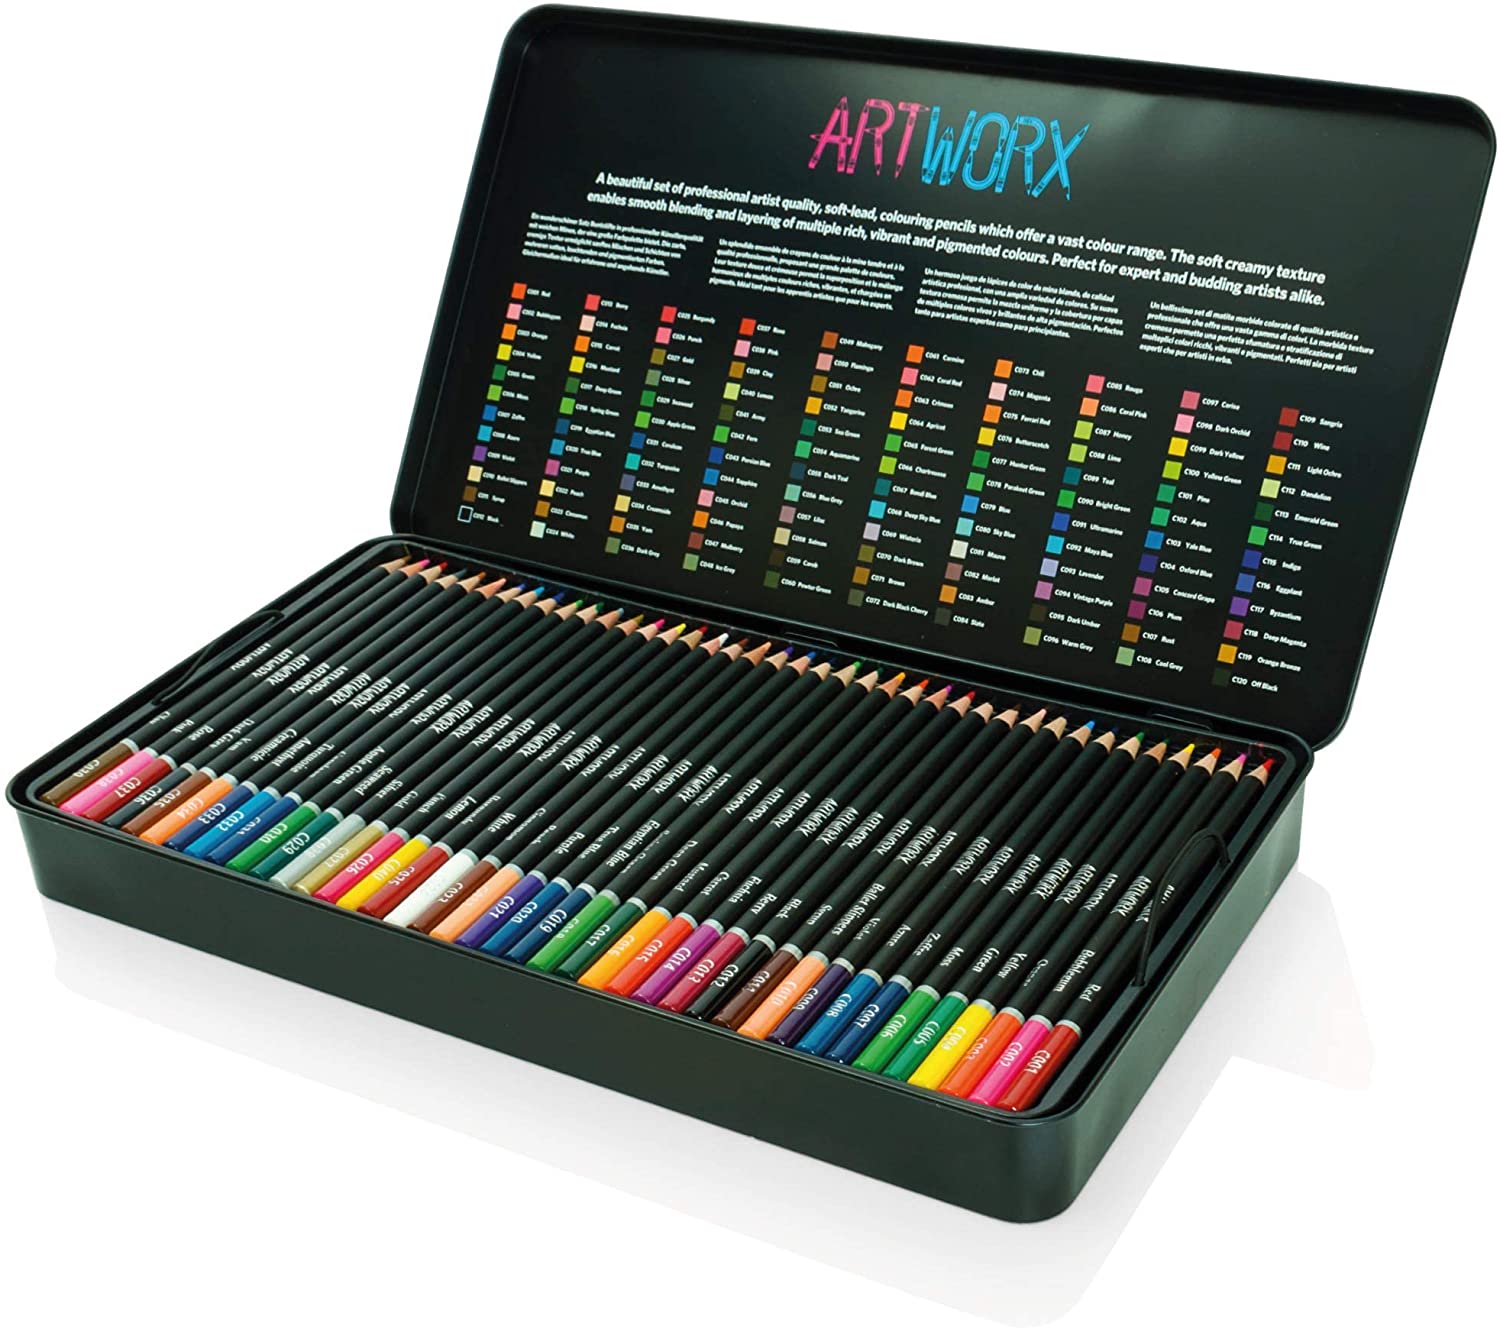 Artworx Premium Artists Colouring Art Pencils open